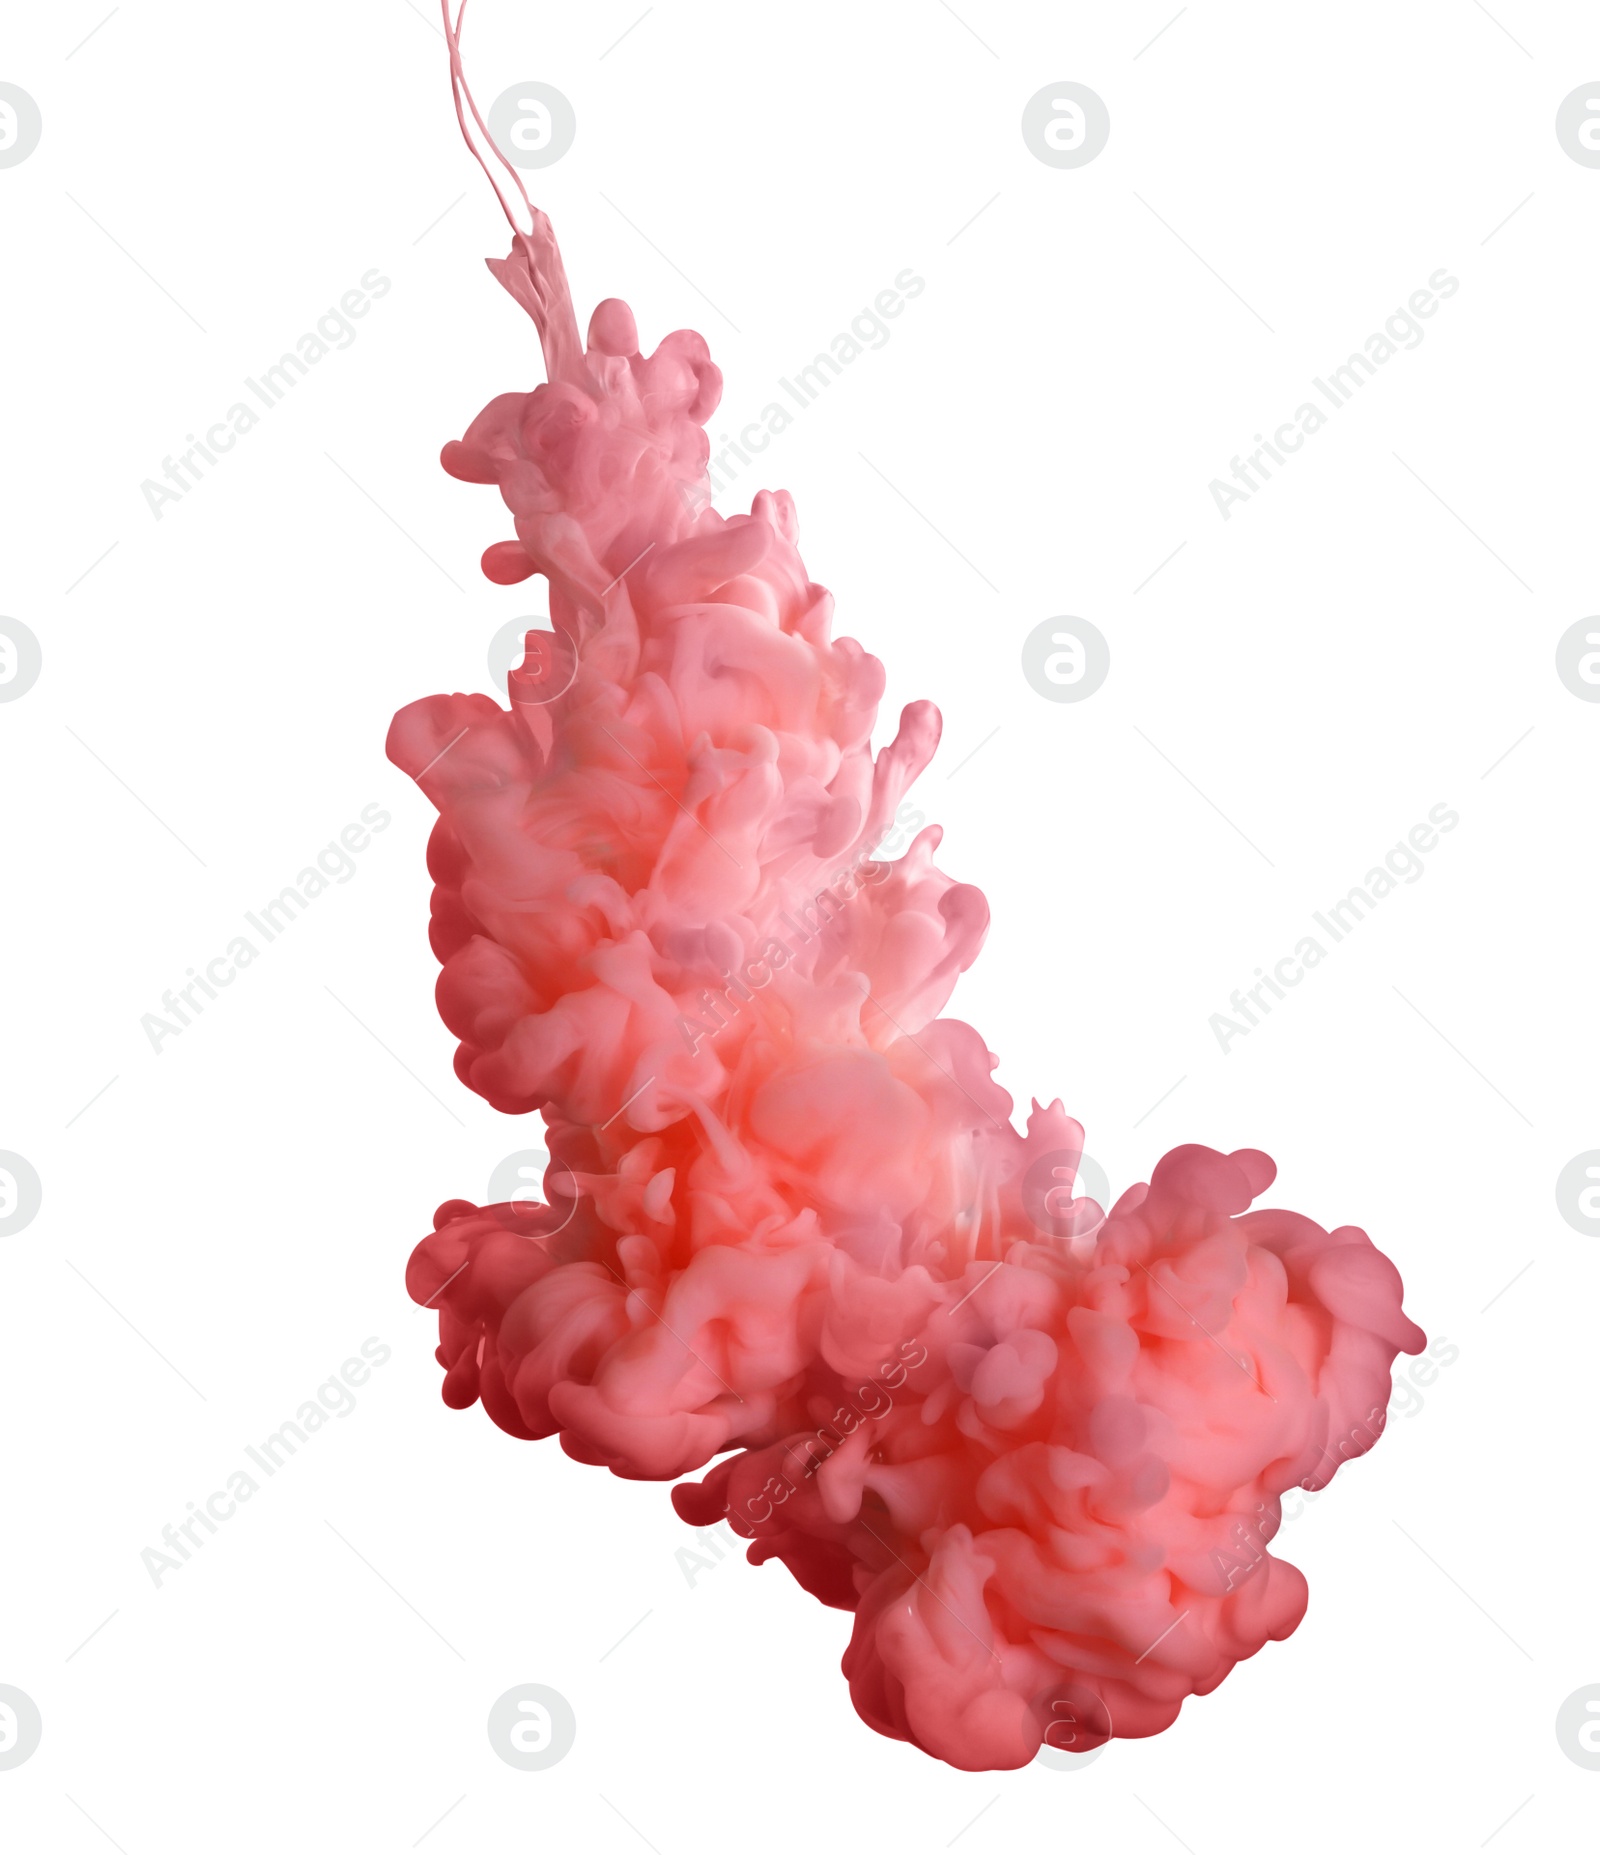 Photo of Splash of pink ink on grey background